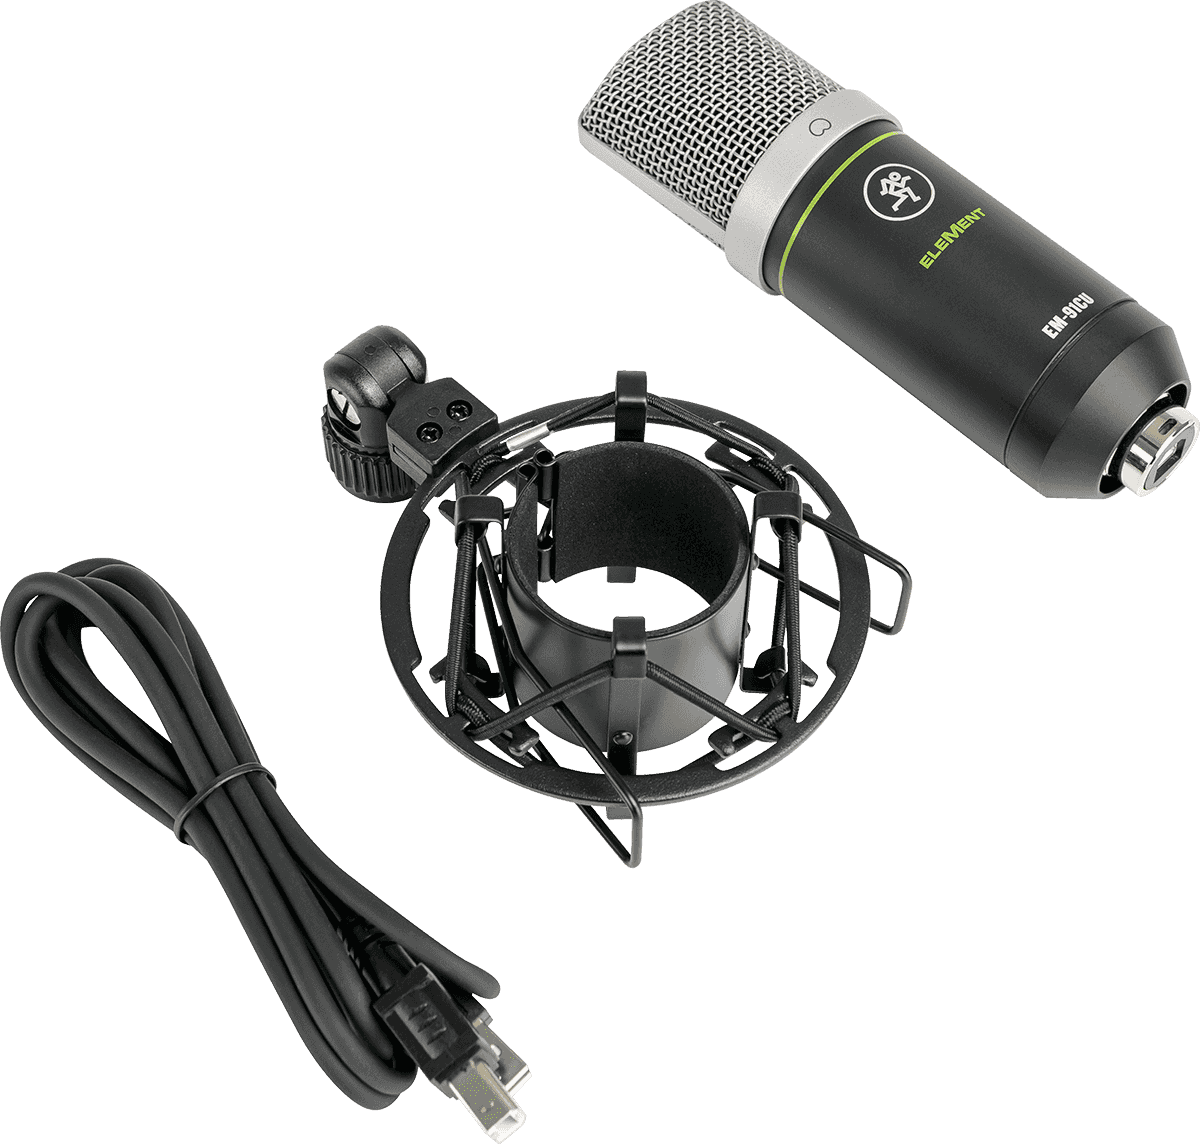 Large Diaphragm USB Condenser Microphone